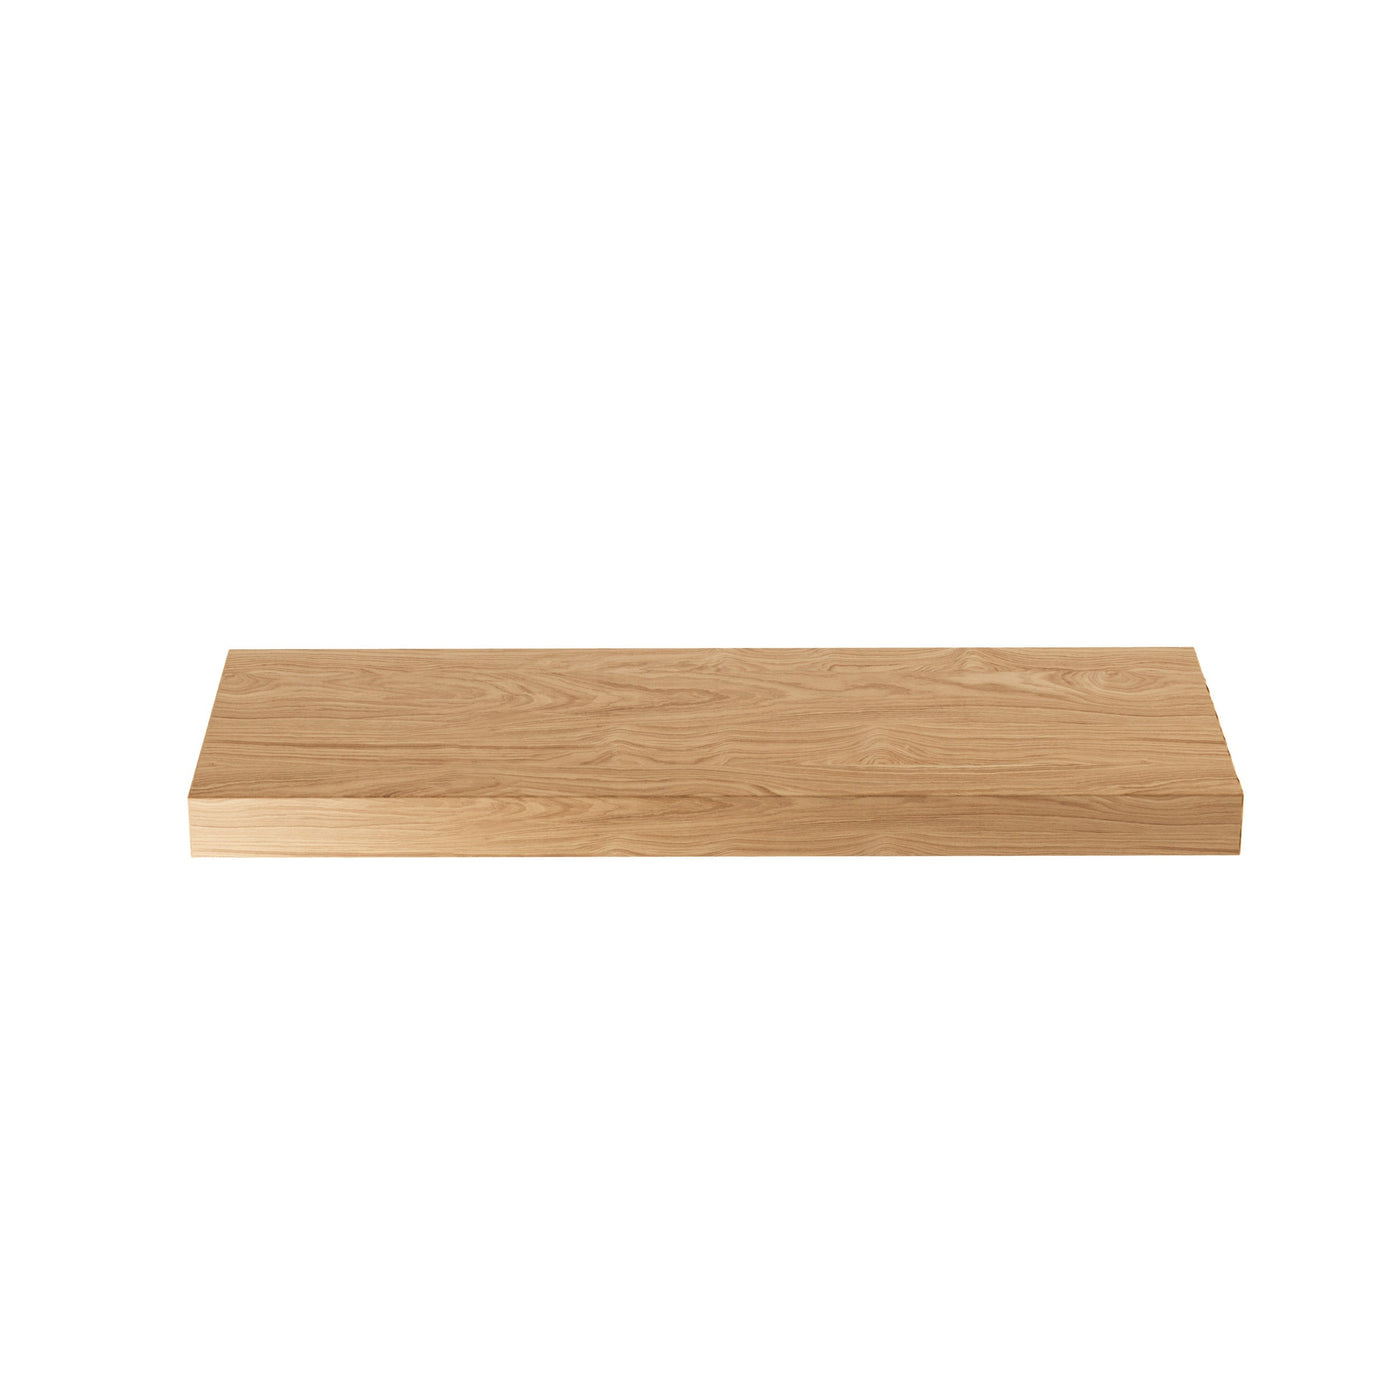 Floating Shelf- White Oak - 1.75 Inches Thick